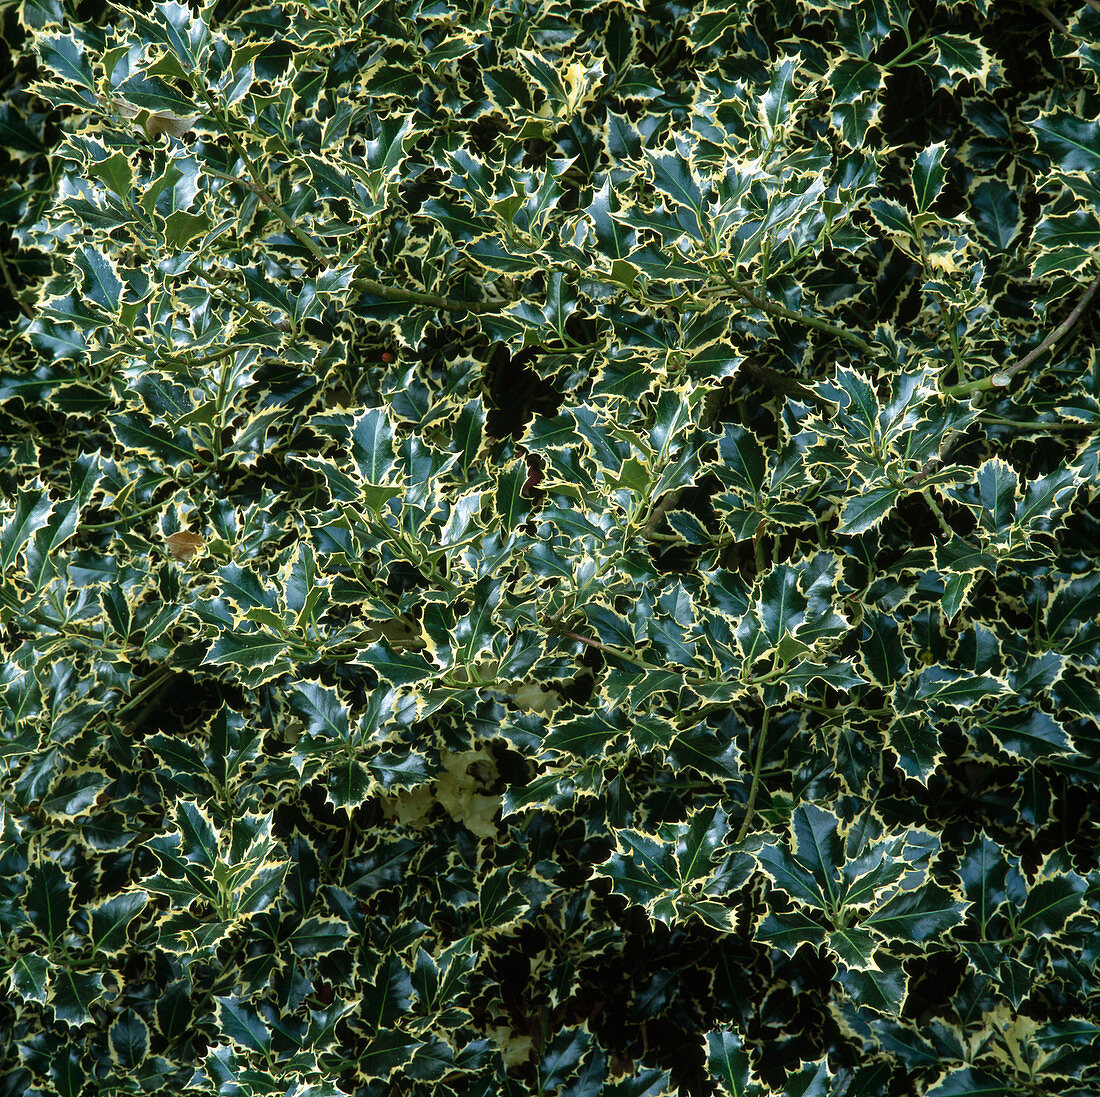 Ilex altaclerensis 'Lawsoniana' (Stechpalme)